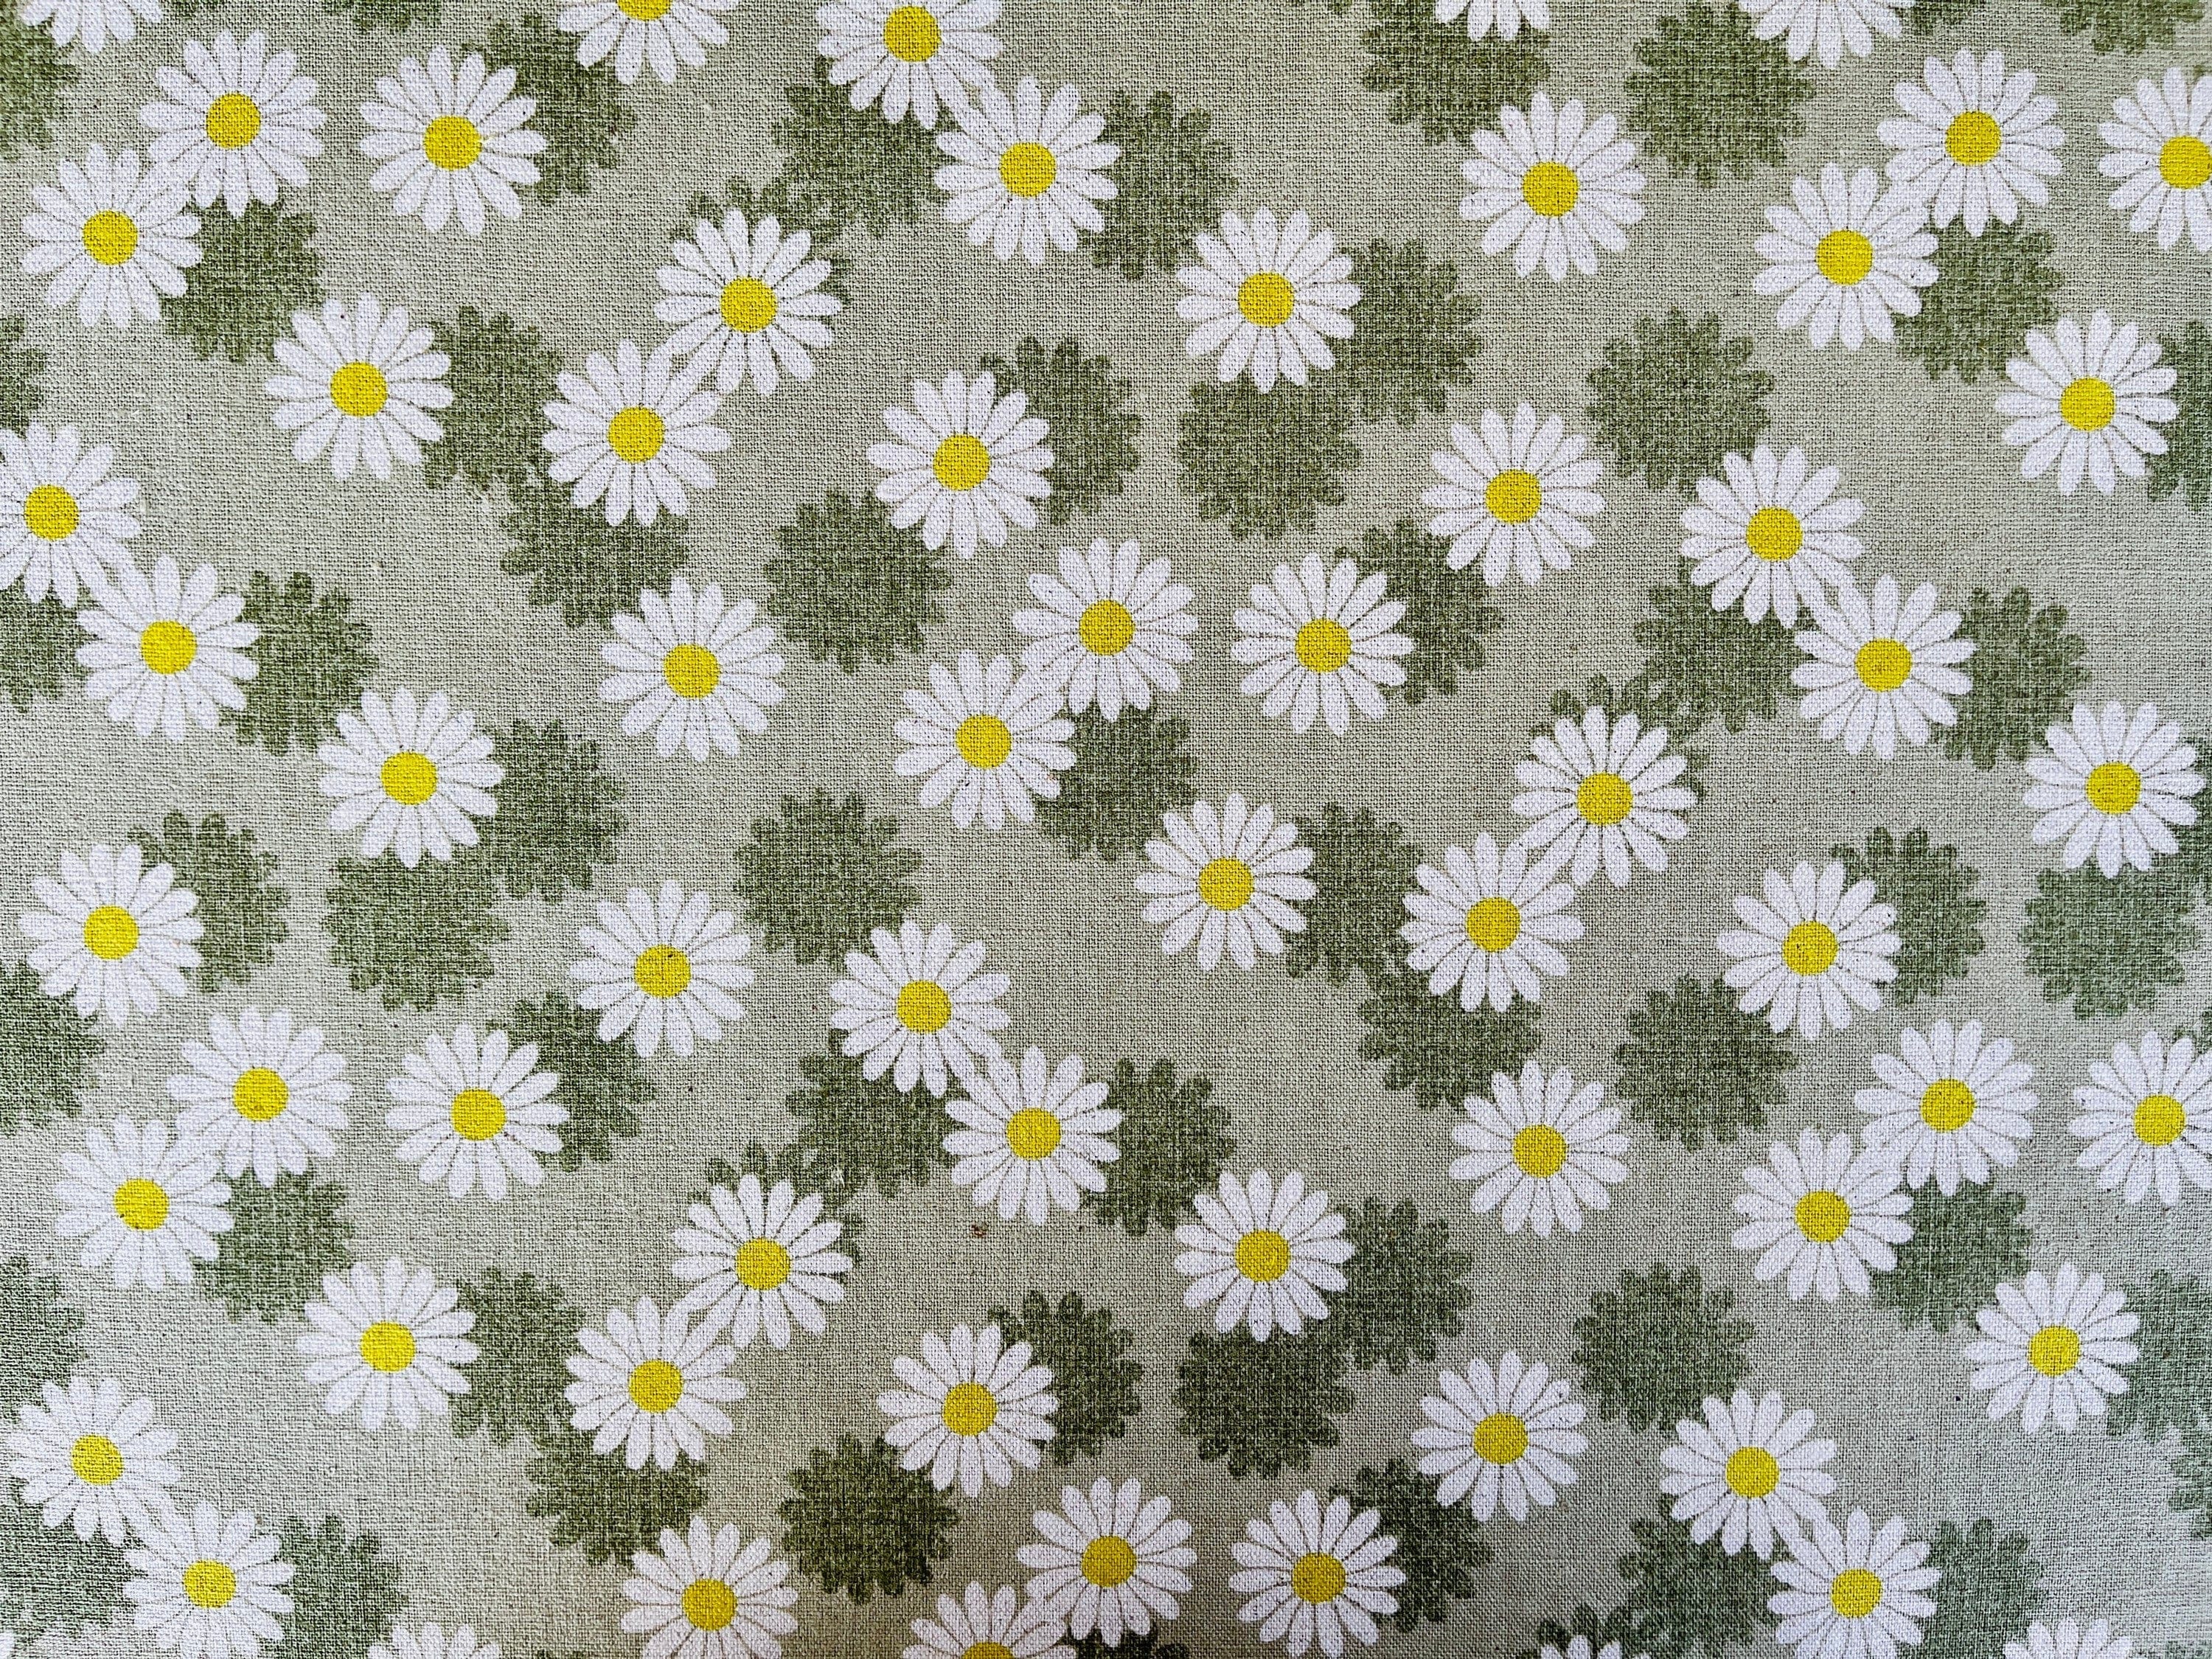 Daisy - Daisy Canvas - Cosmo - Japanese Textile - Cotton Linen Fabric - Printed Canvas - AP-21703-1C